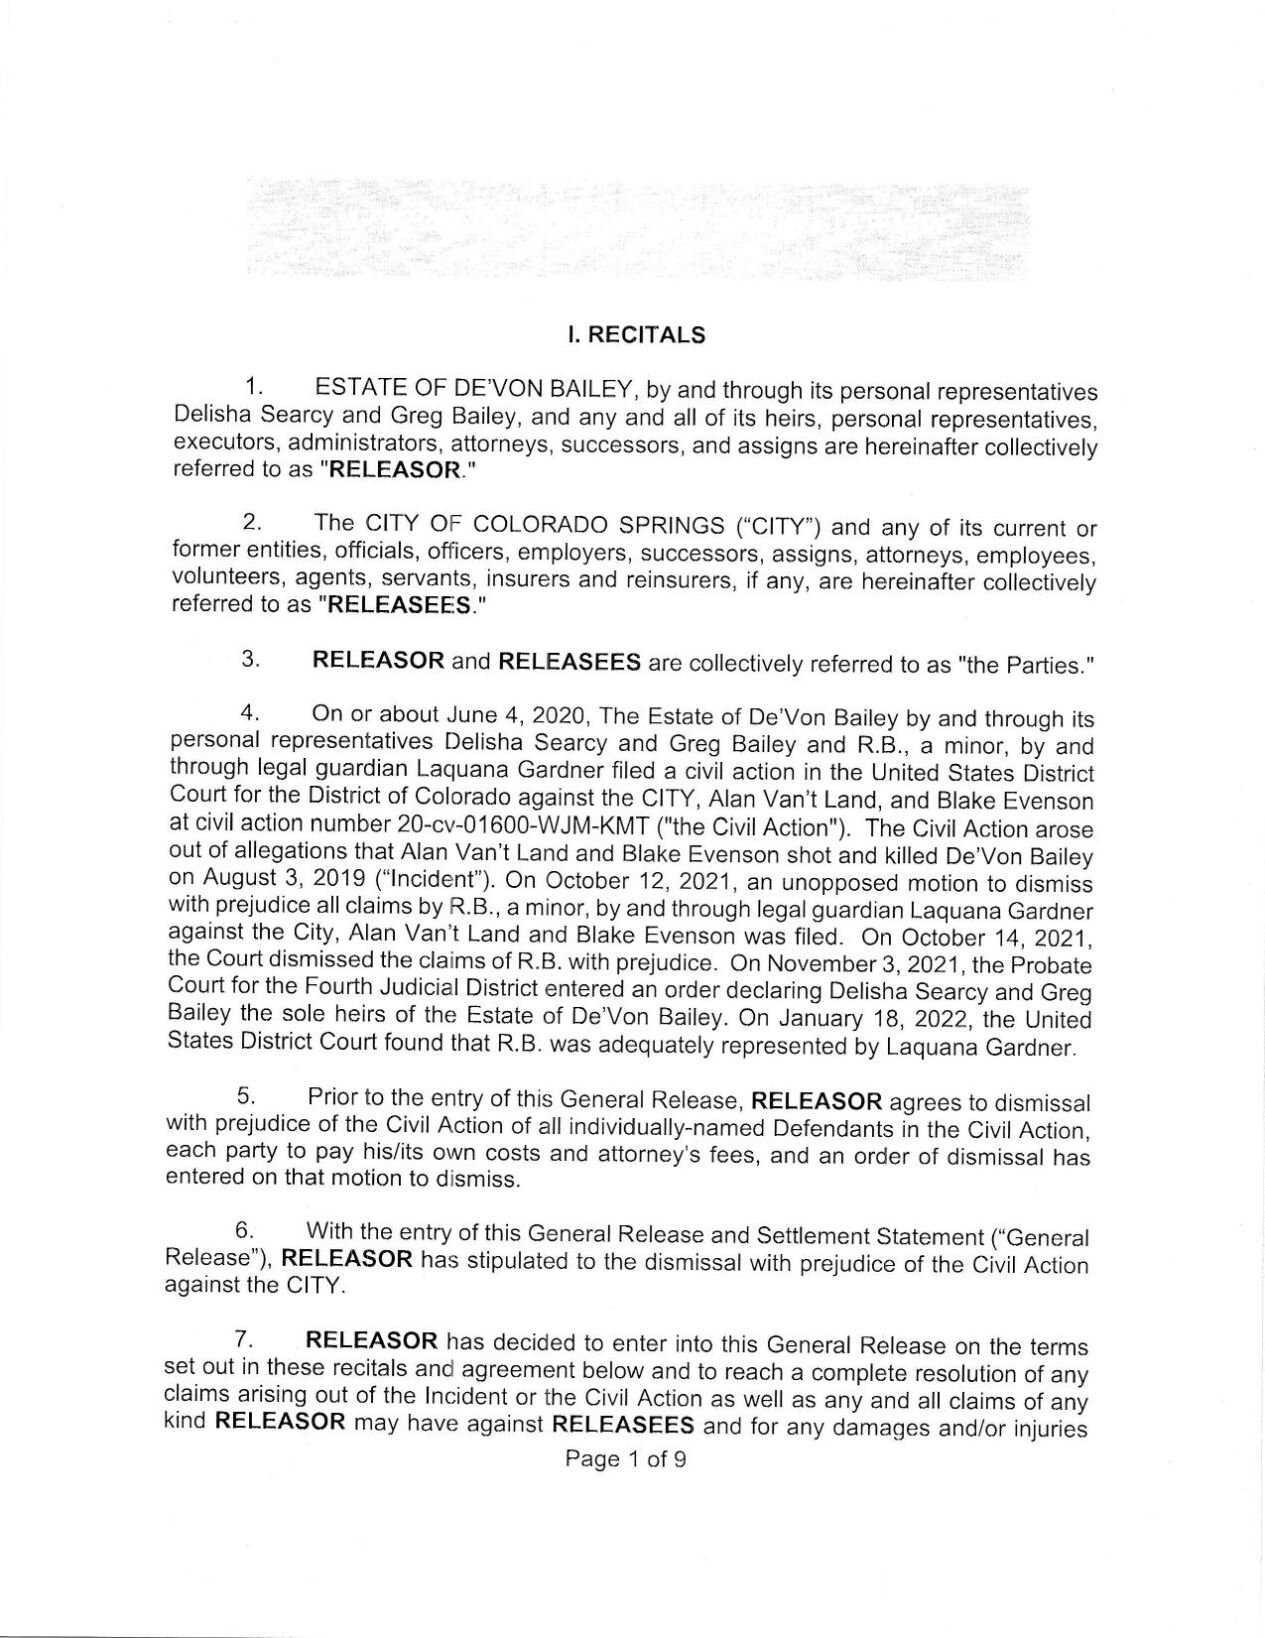 Settlement Agreement - FINAL - Signed by All Pltfs (1).pdf